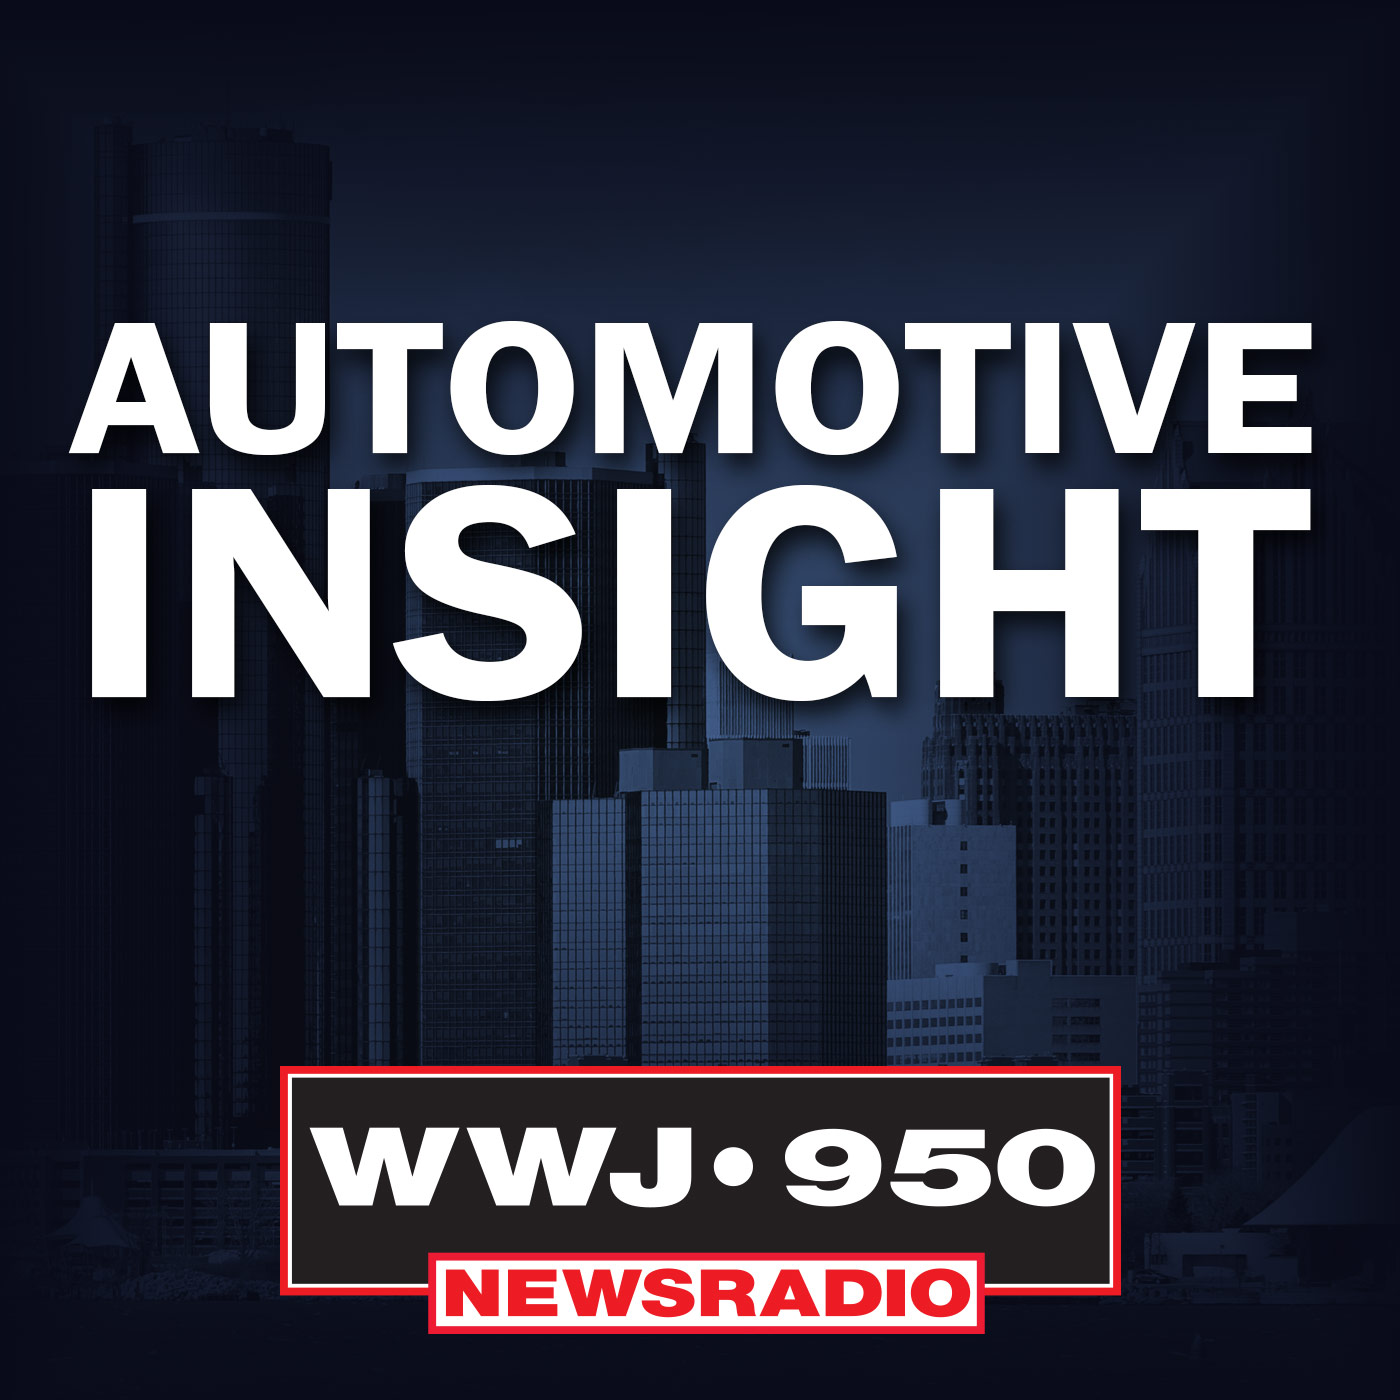 Automotive Insight - Digital twin enters automotive vocabulary